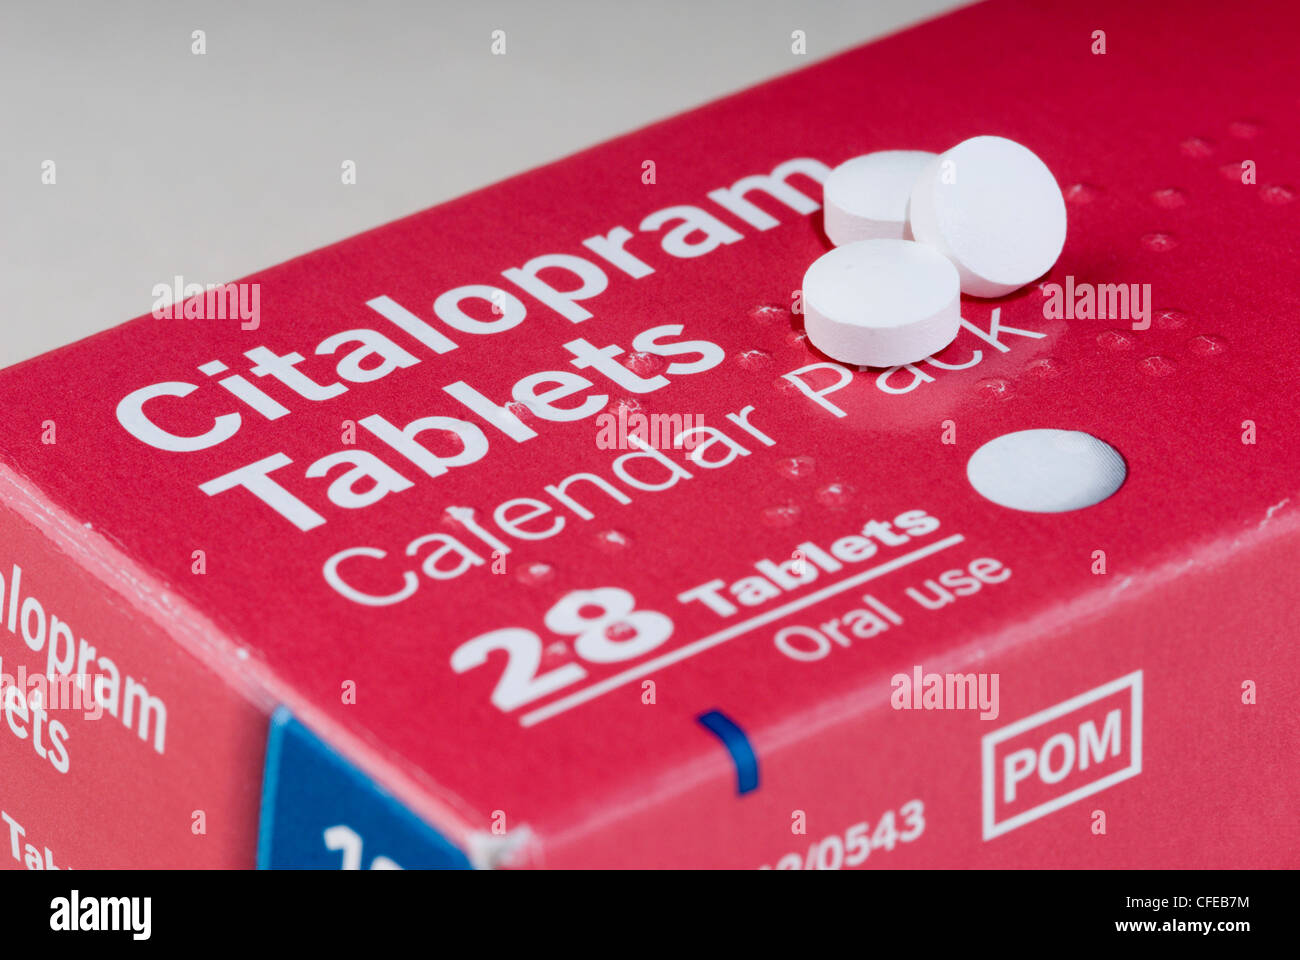 Imagen Genérica De Citalopram Tabletas Receta Como Un Antidepresivo Conocido Como Selectivos De